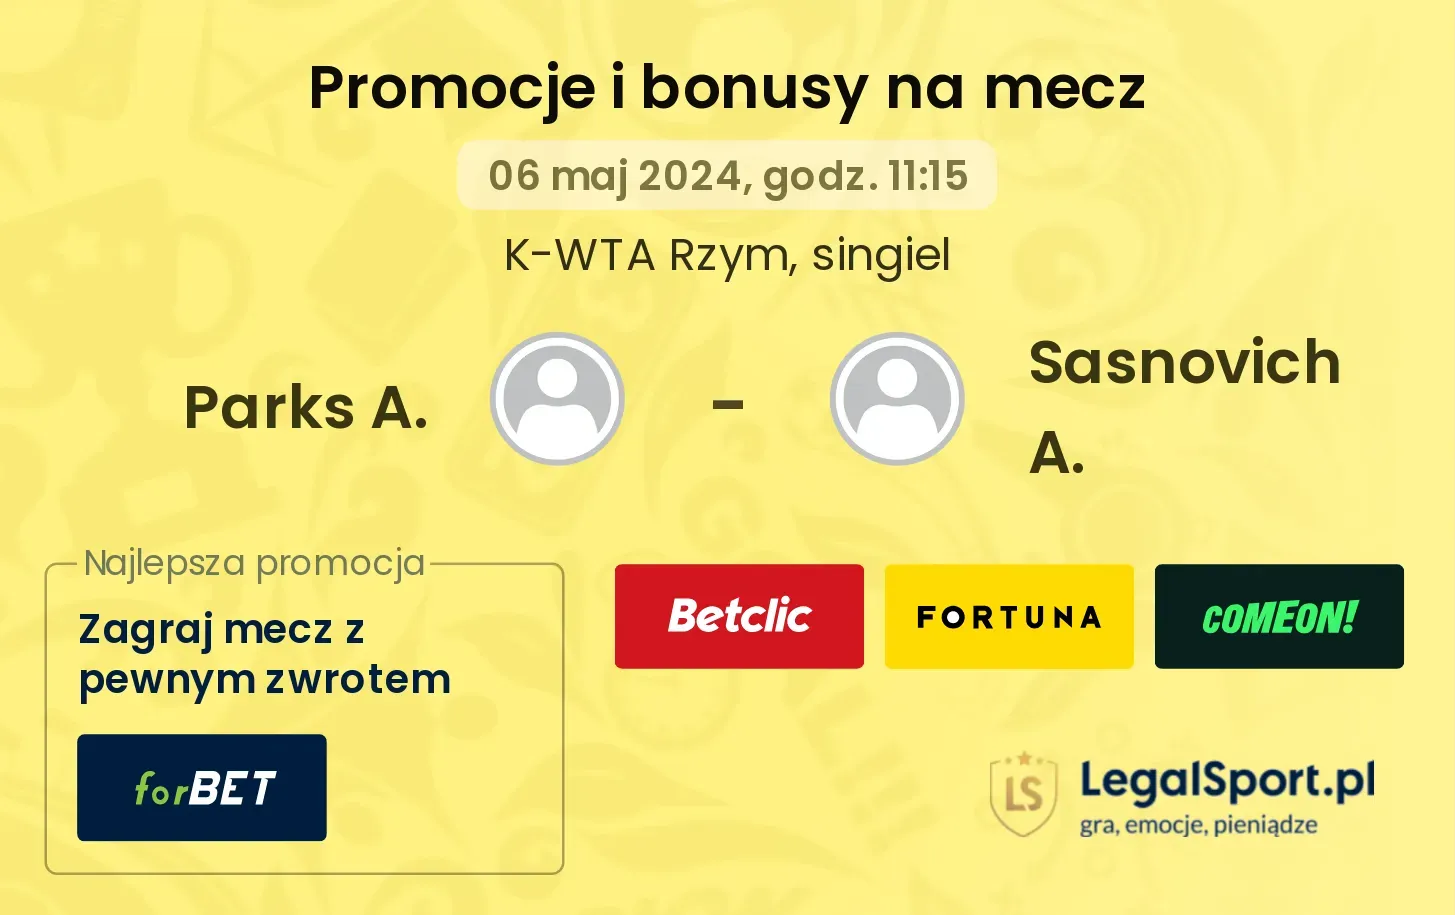 Parks A. - Sasnovich A. promocje bonusy na mecz